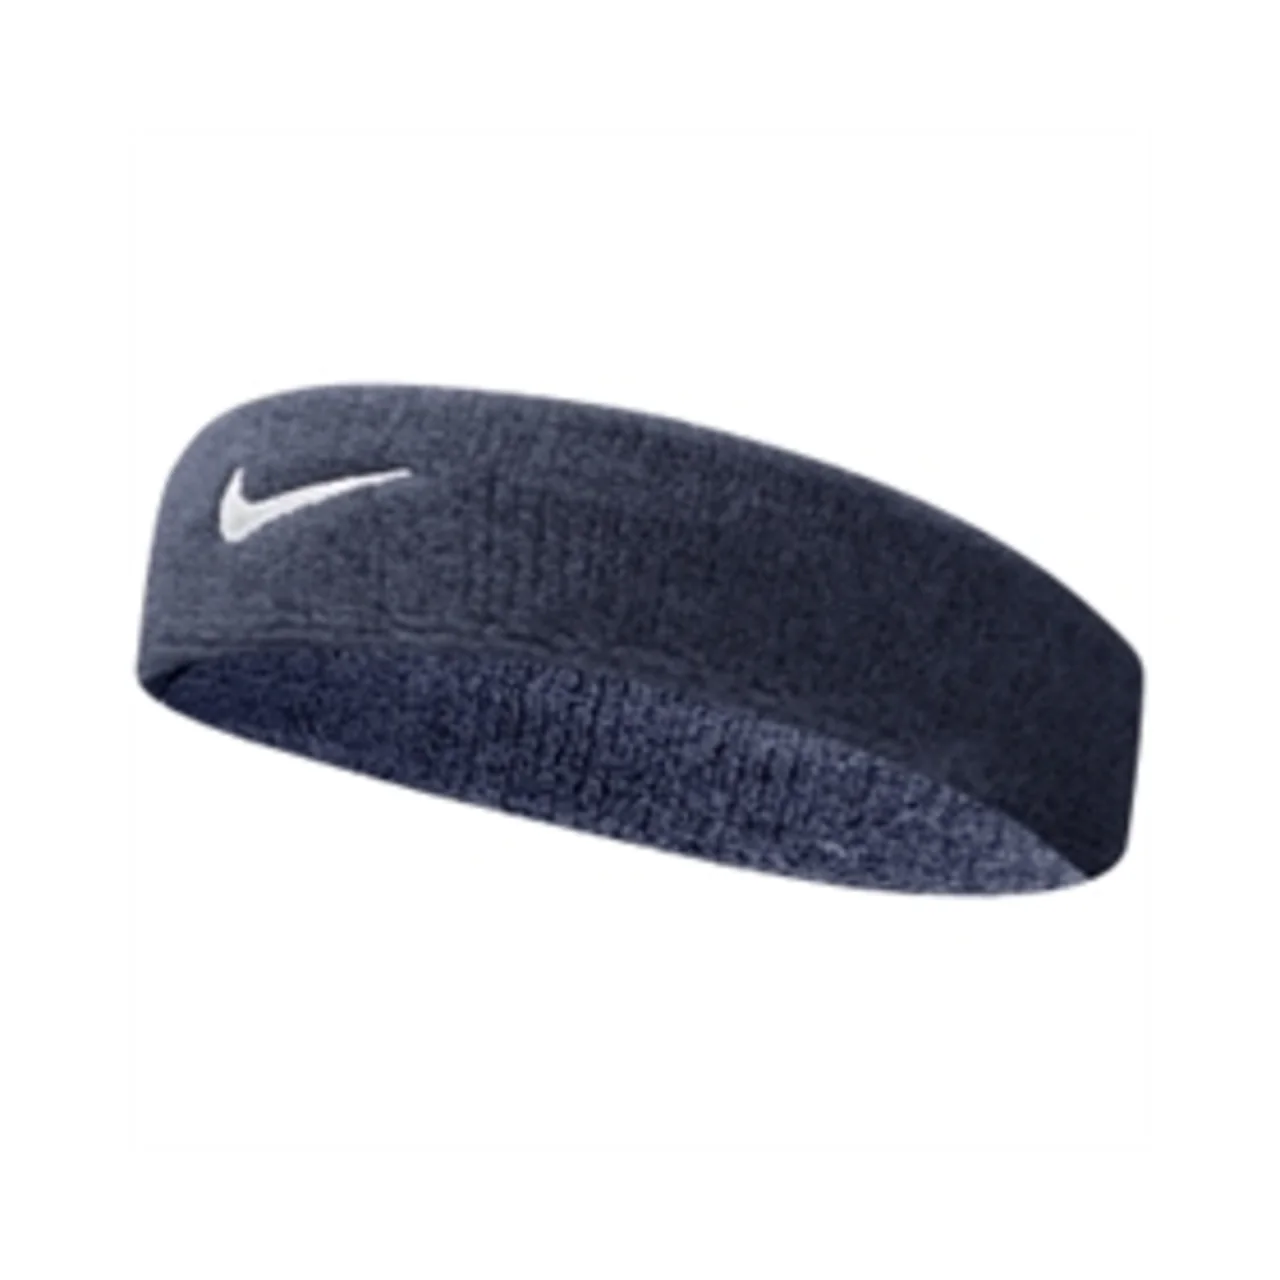 Nike Headband Dark Blue